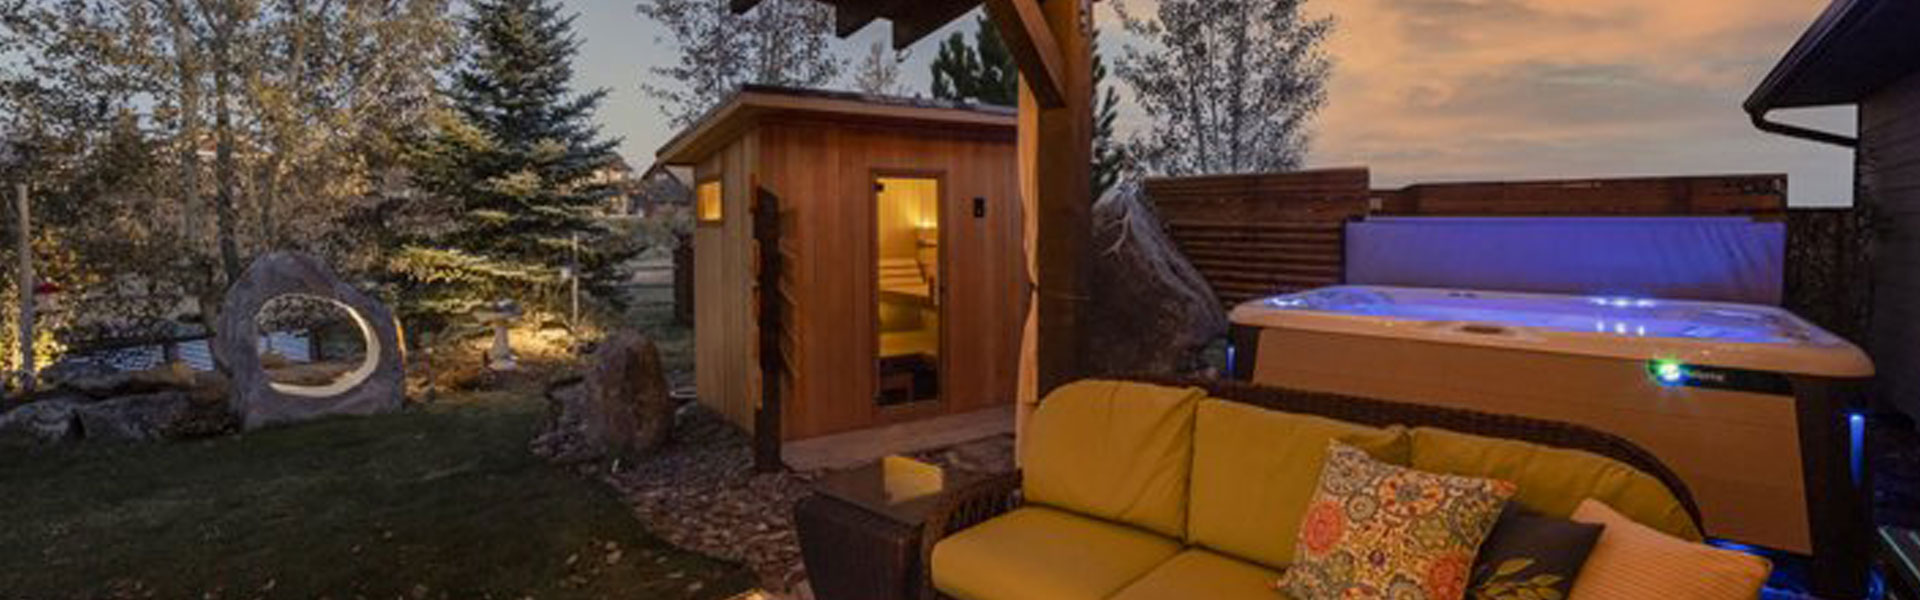 Include a Sauna in Your Backyard RetreatImage